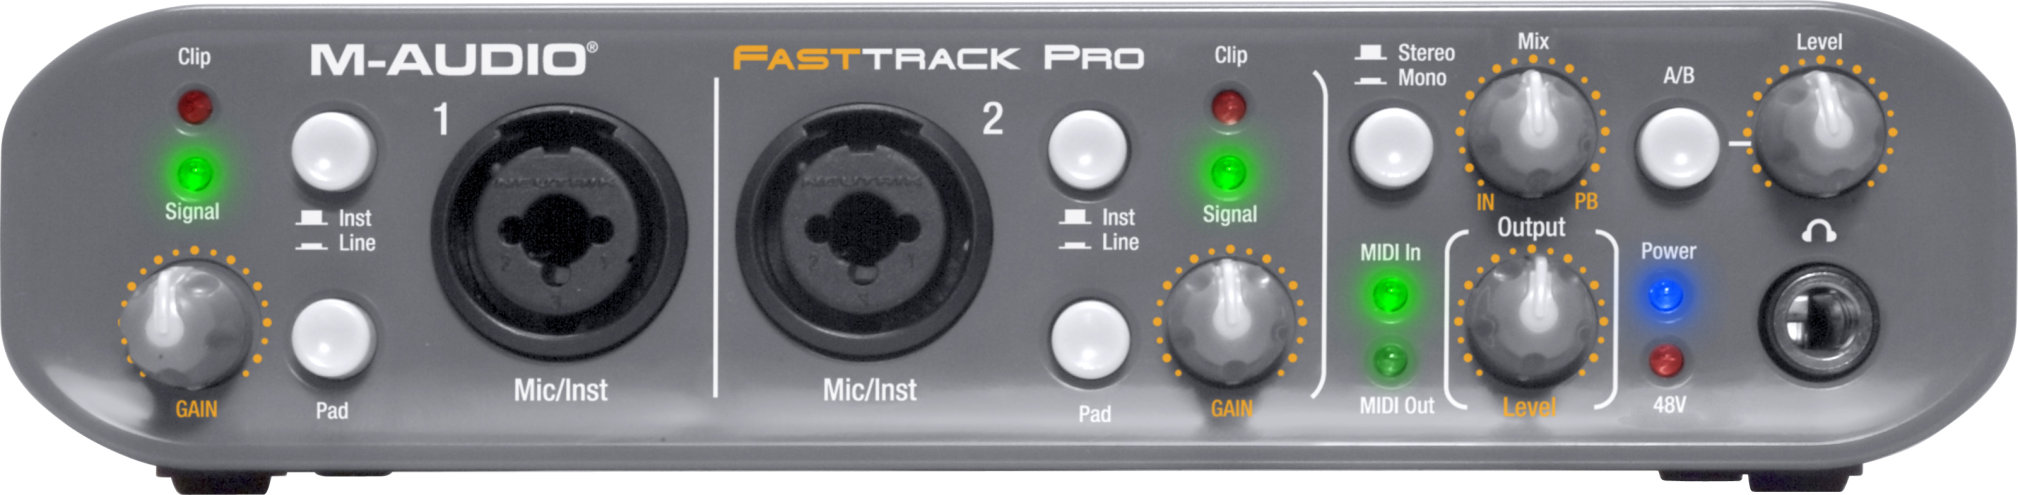 m audio fast track driver 6.0.2